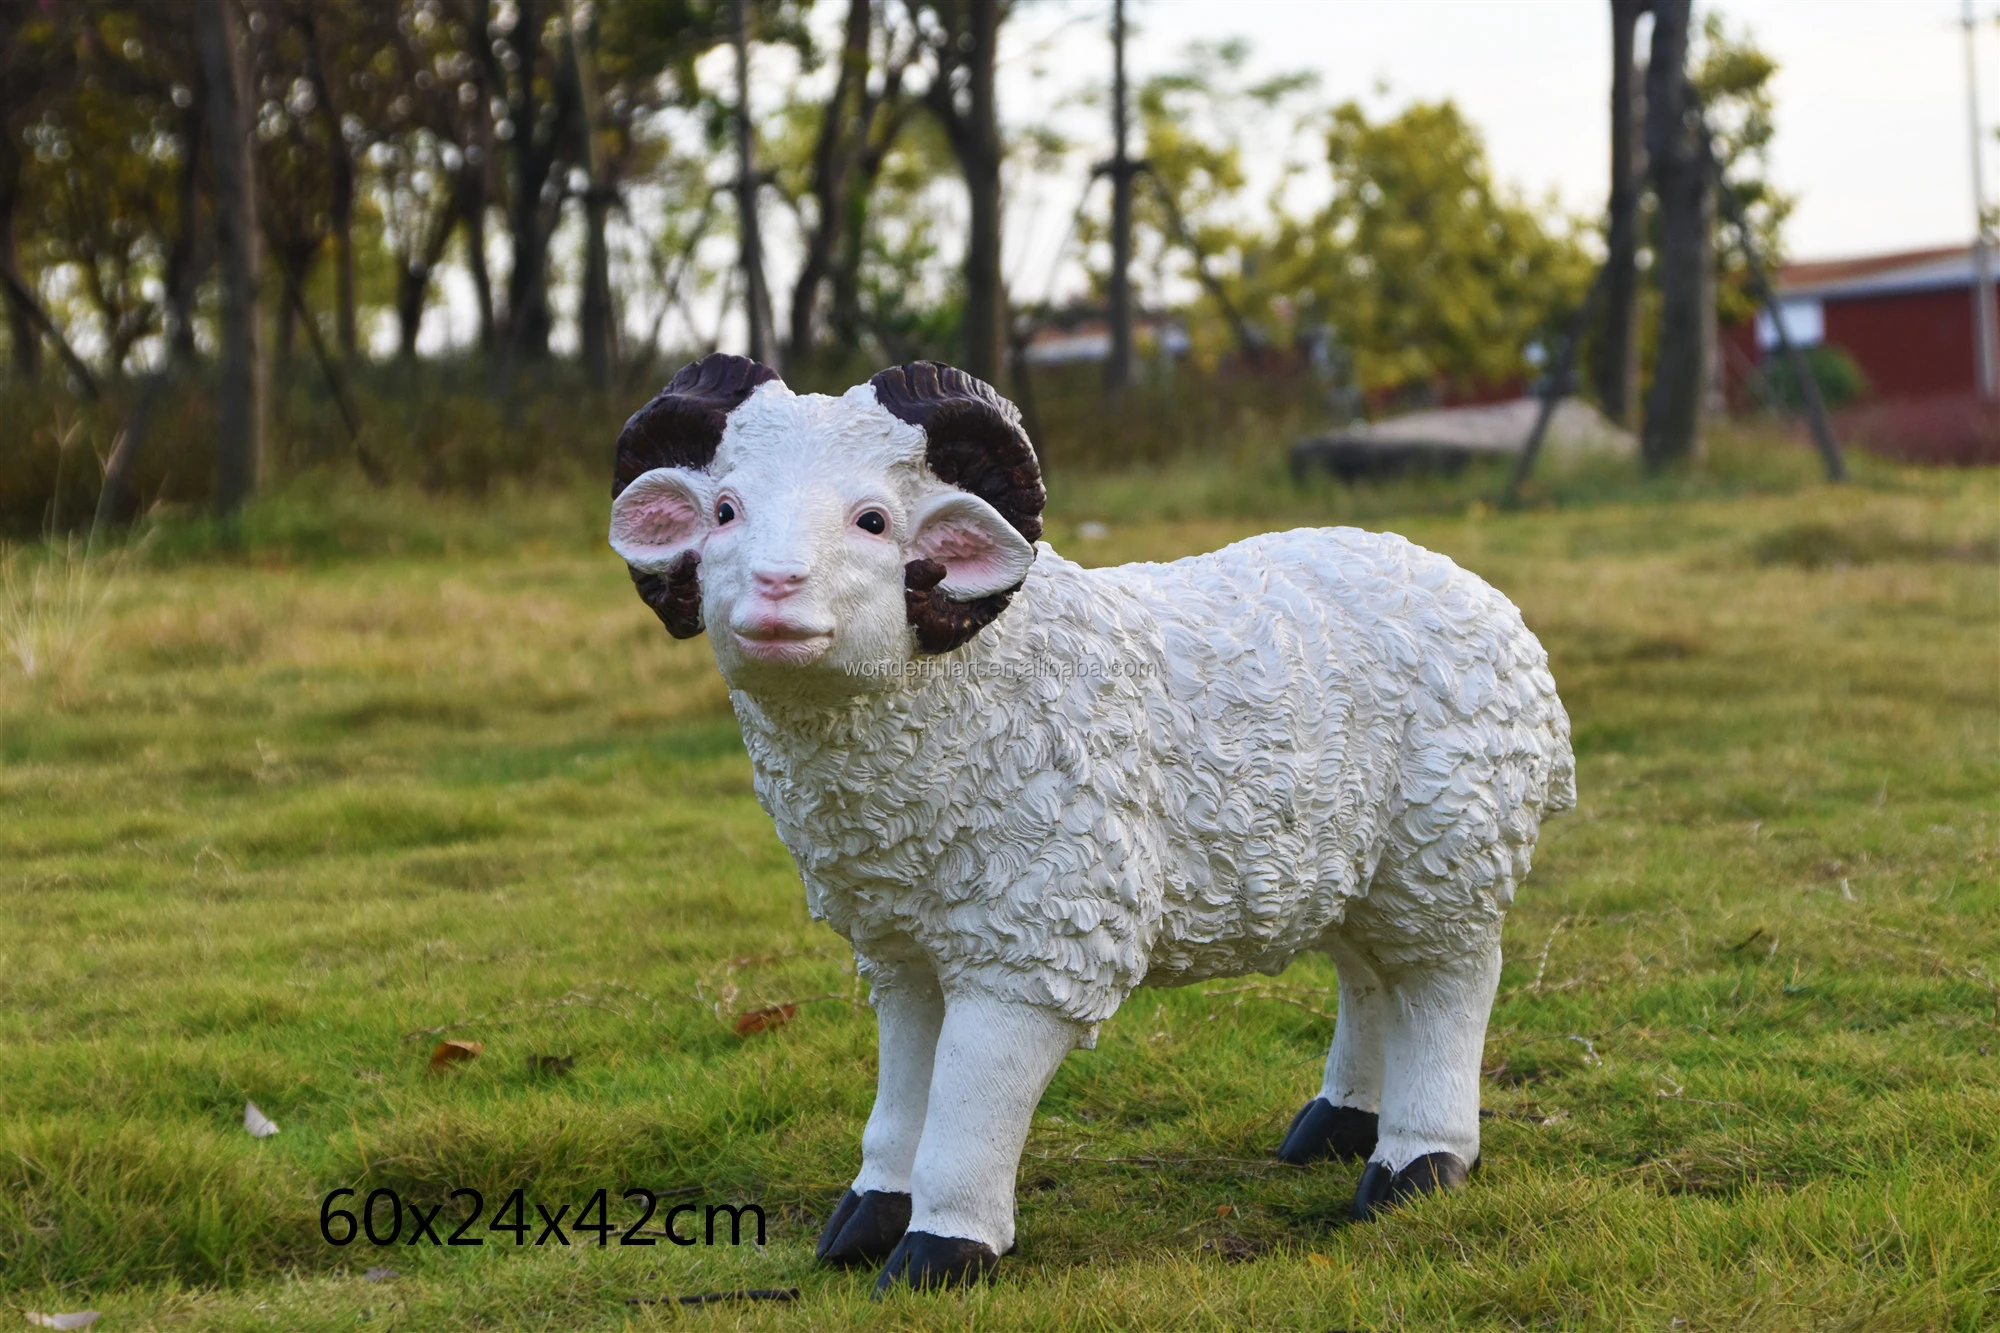 Eco Friendly Large Size Polistone Cute Farm White Sheep Statue Resin Animal Sculpture for Home Decor Outdoor Garden Decoration